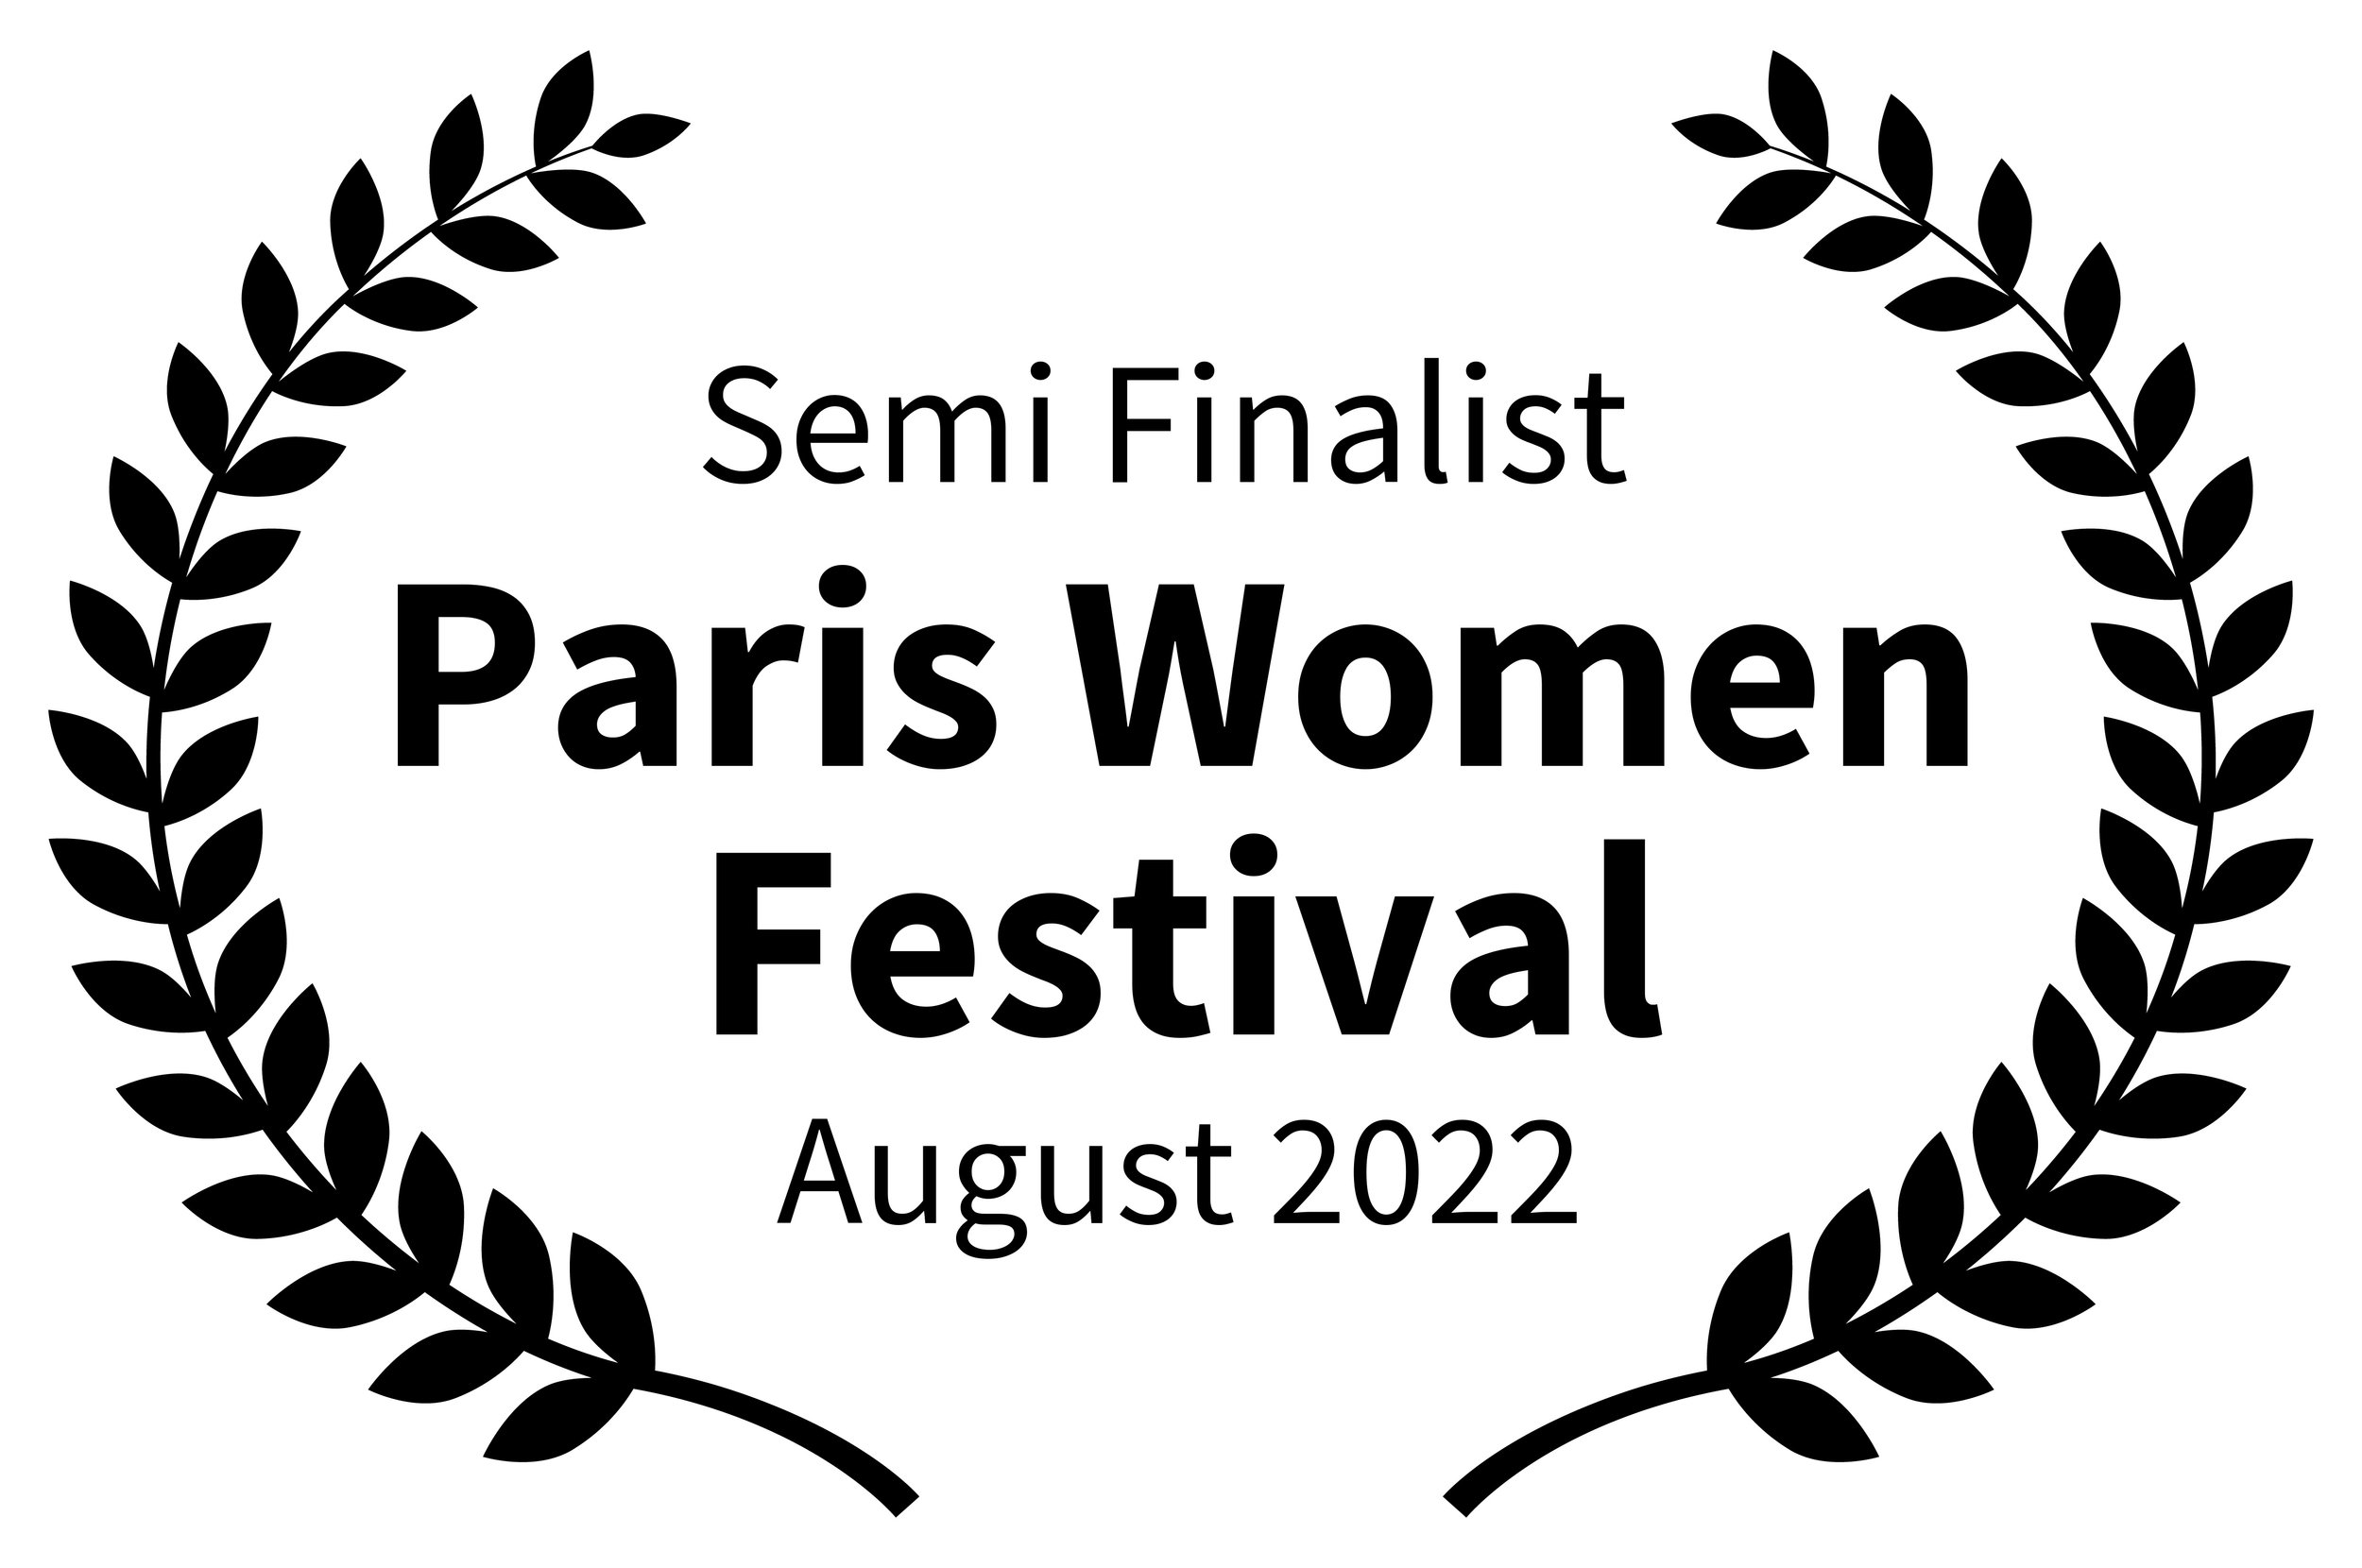 SemiFinalist-ParisWomenFestival-August2022.jpg